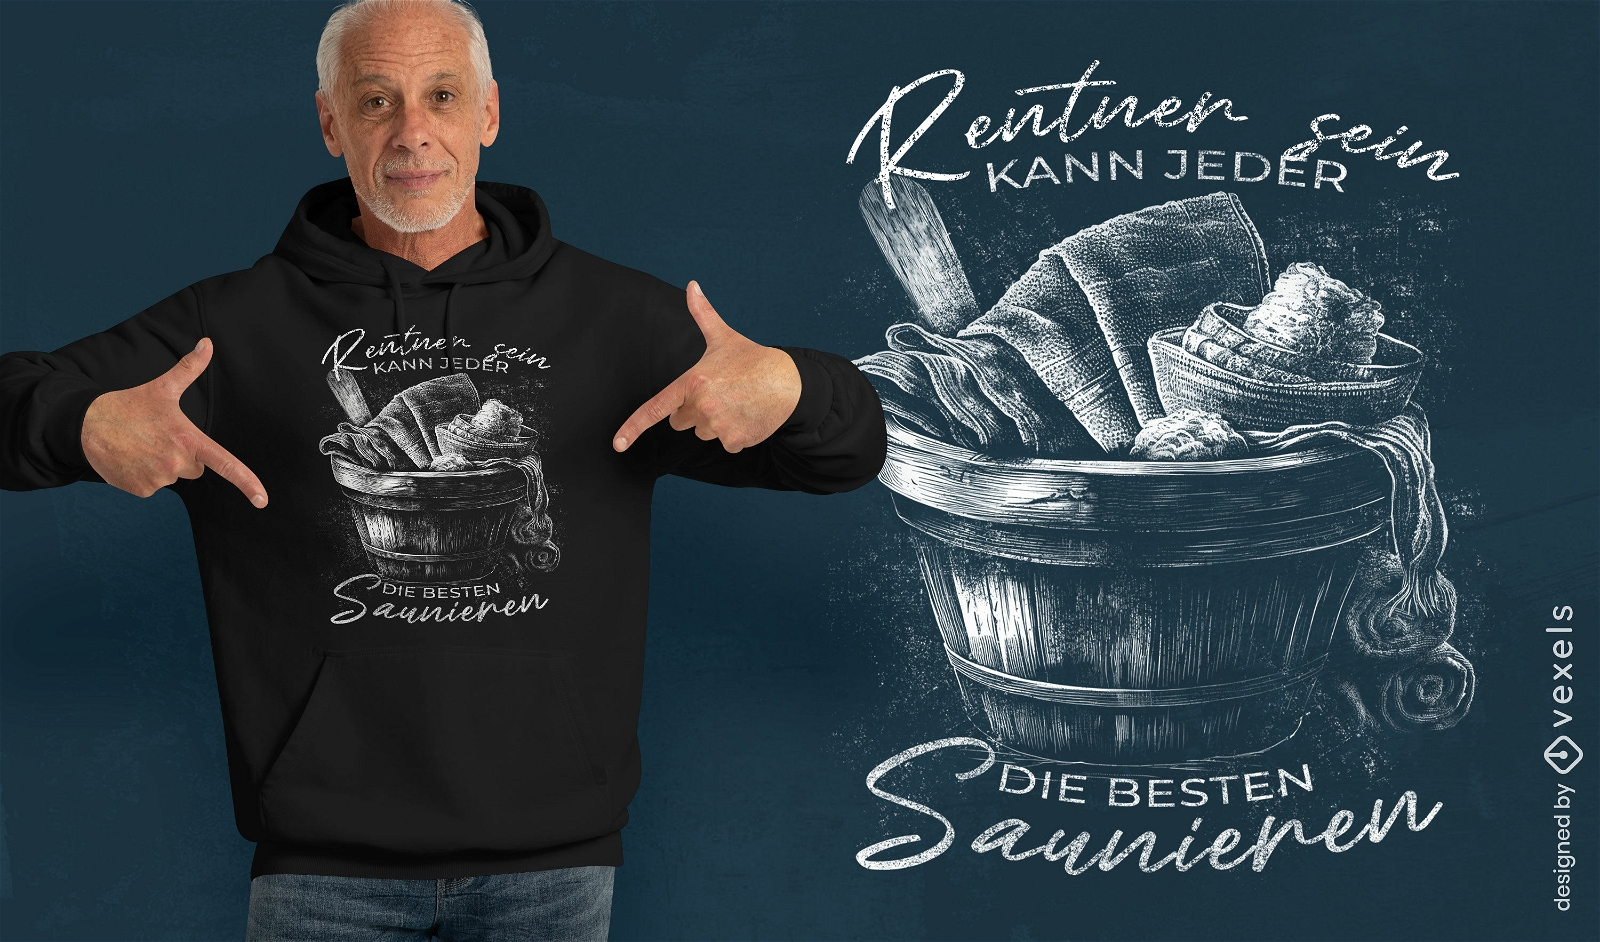 Humorvolles T-Shirt-Design mit Sauna-Motiv